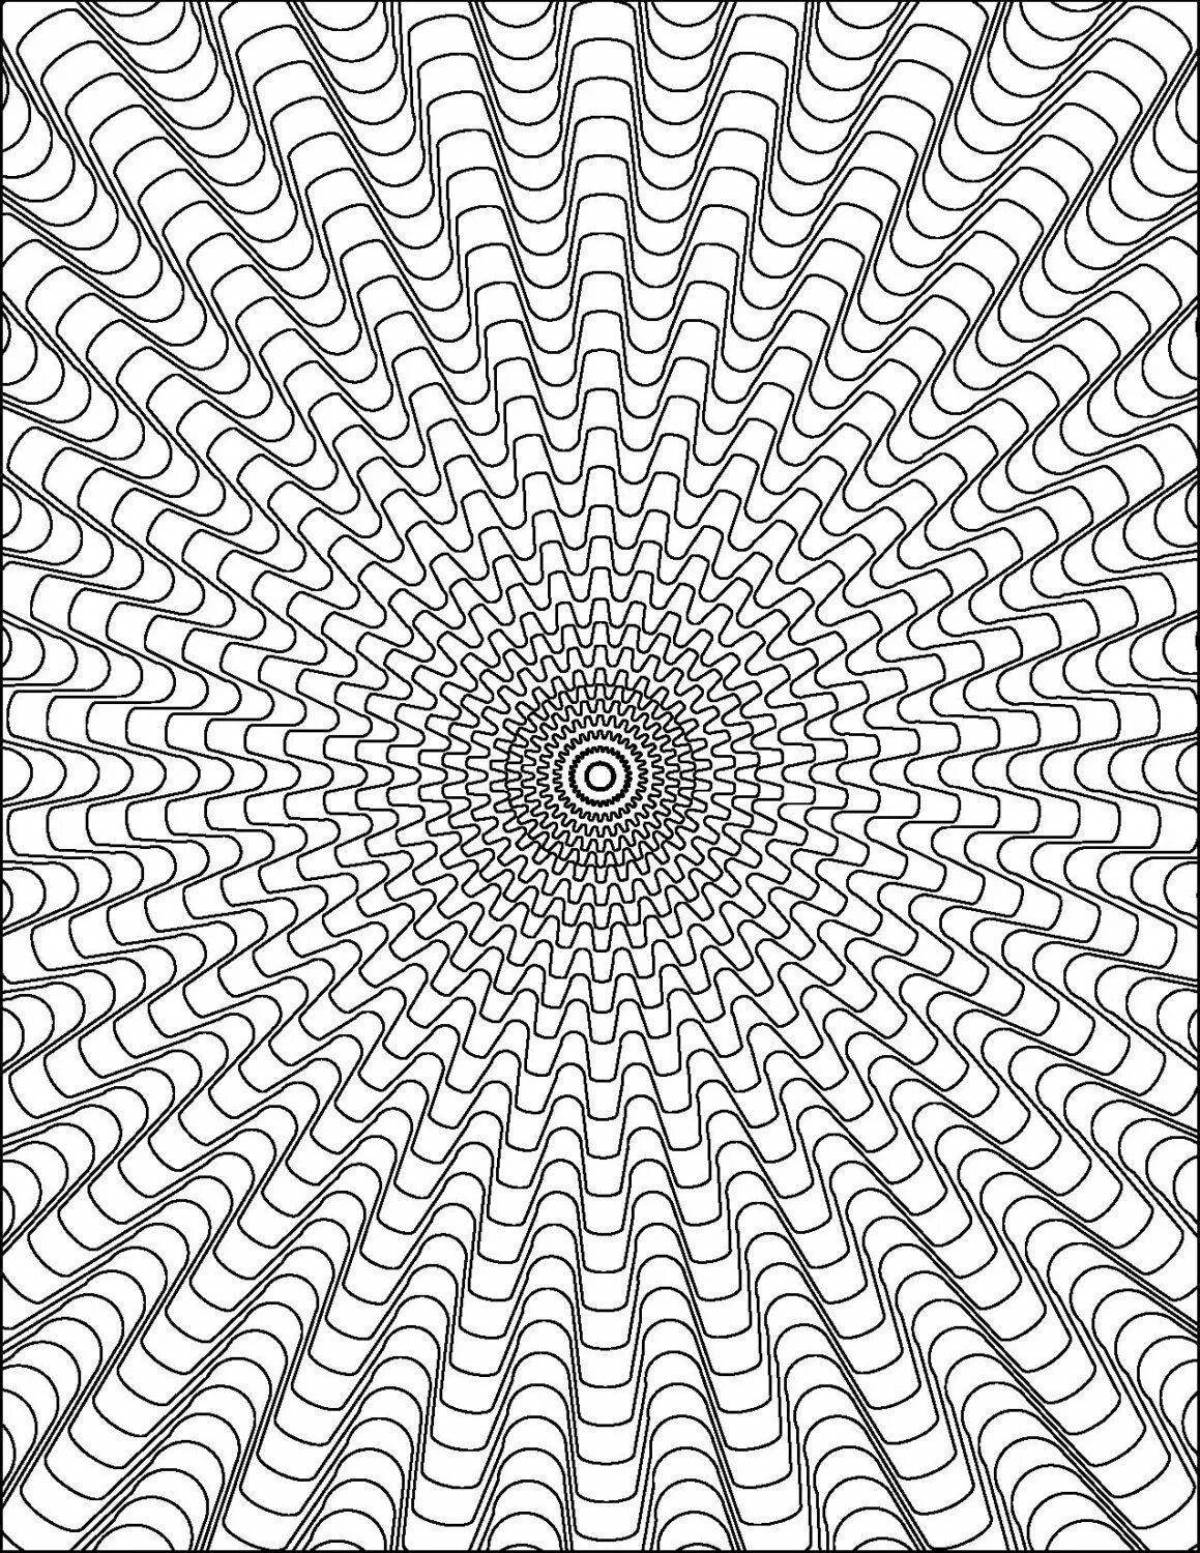 Hypnotic illusion coloring book